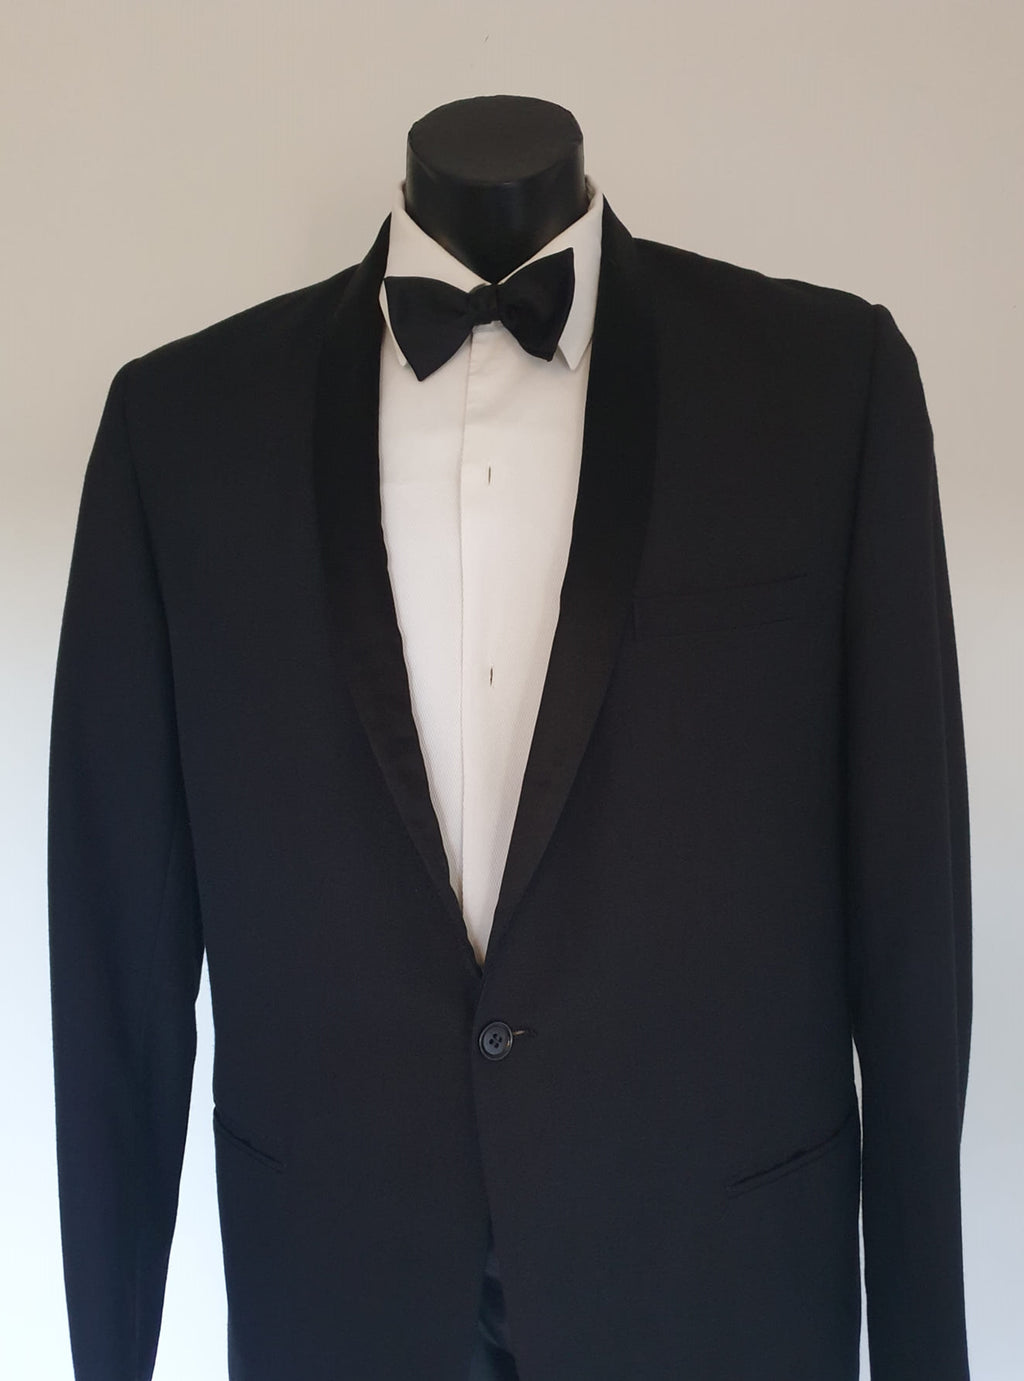 1970s vintage tuxedo dinner jacket with satin shawl neck by Glenford Size 38L